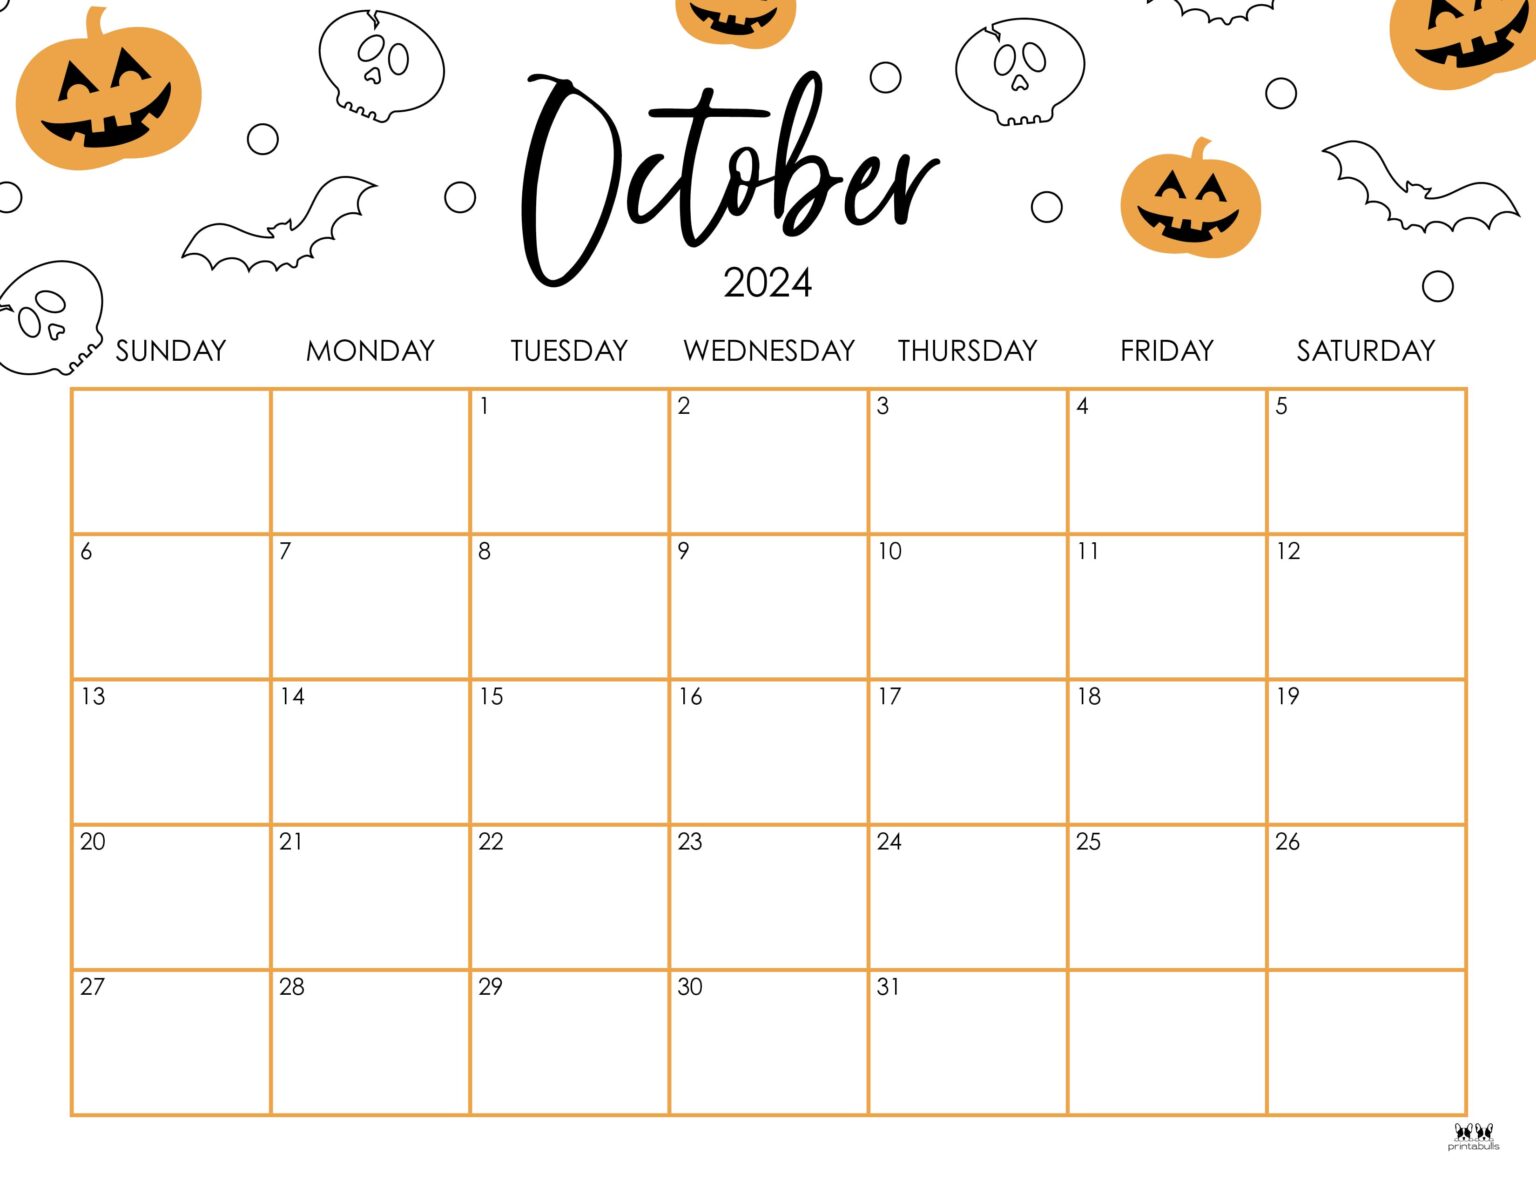 October 2024 Calendars - 50 FREE Printables | Printabulls